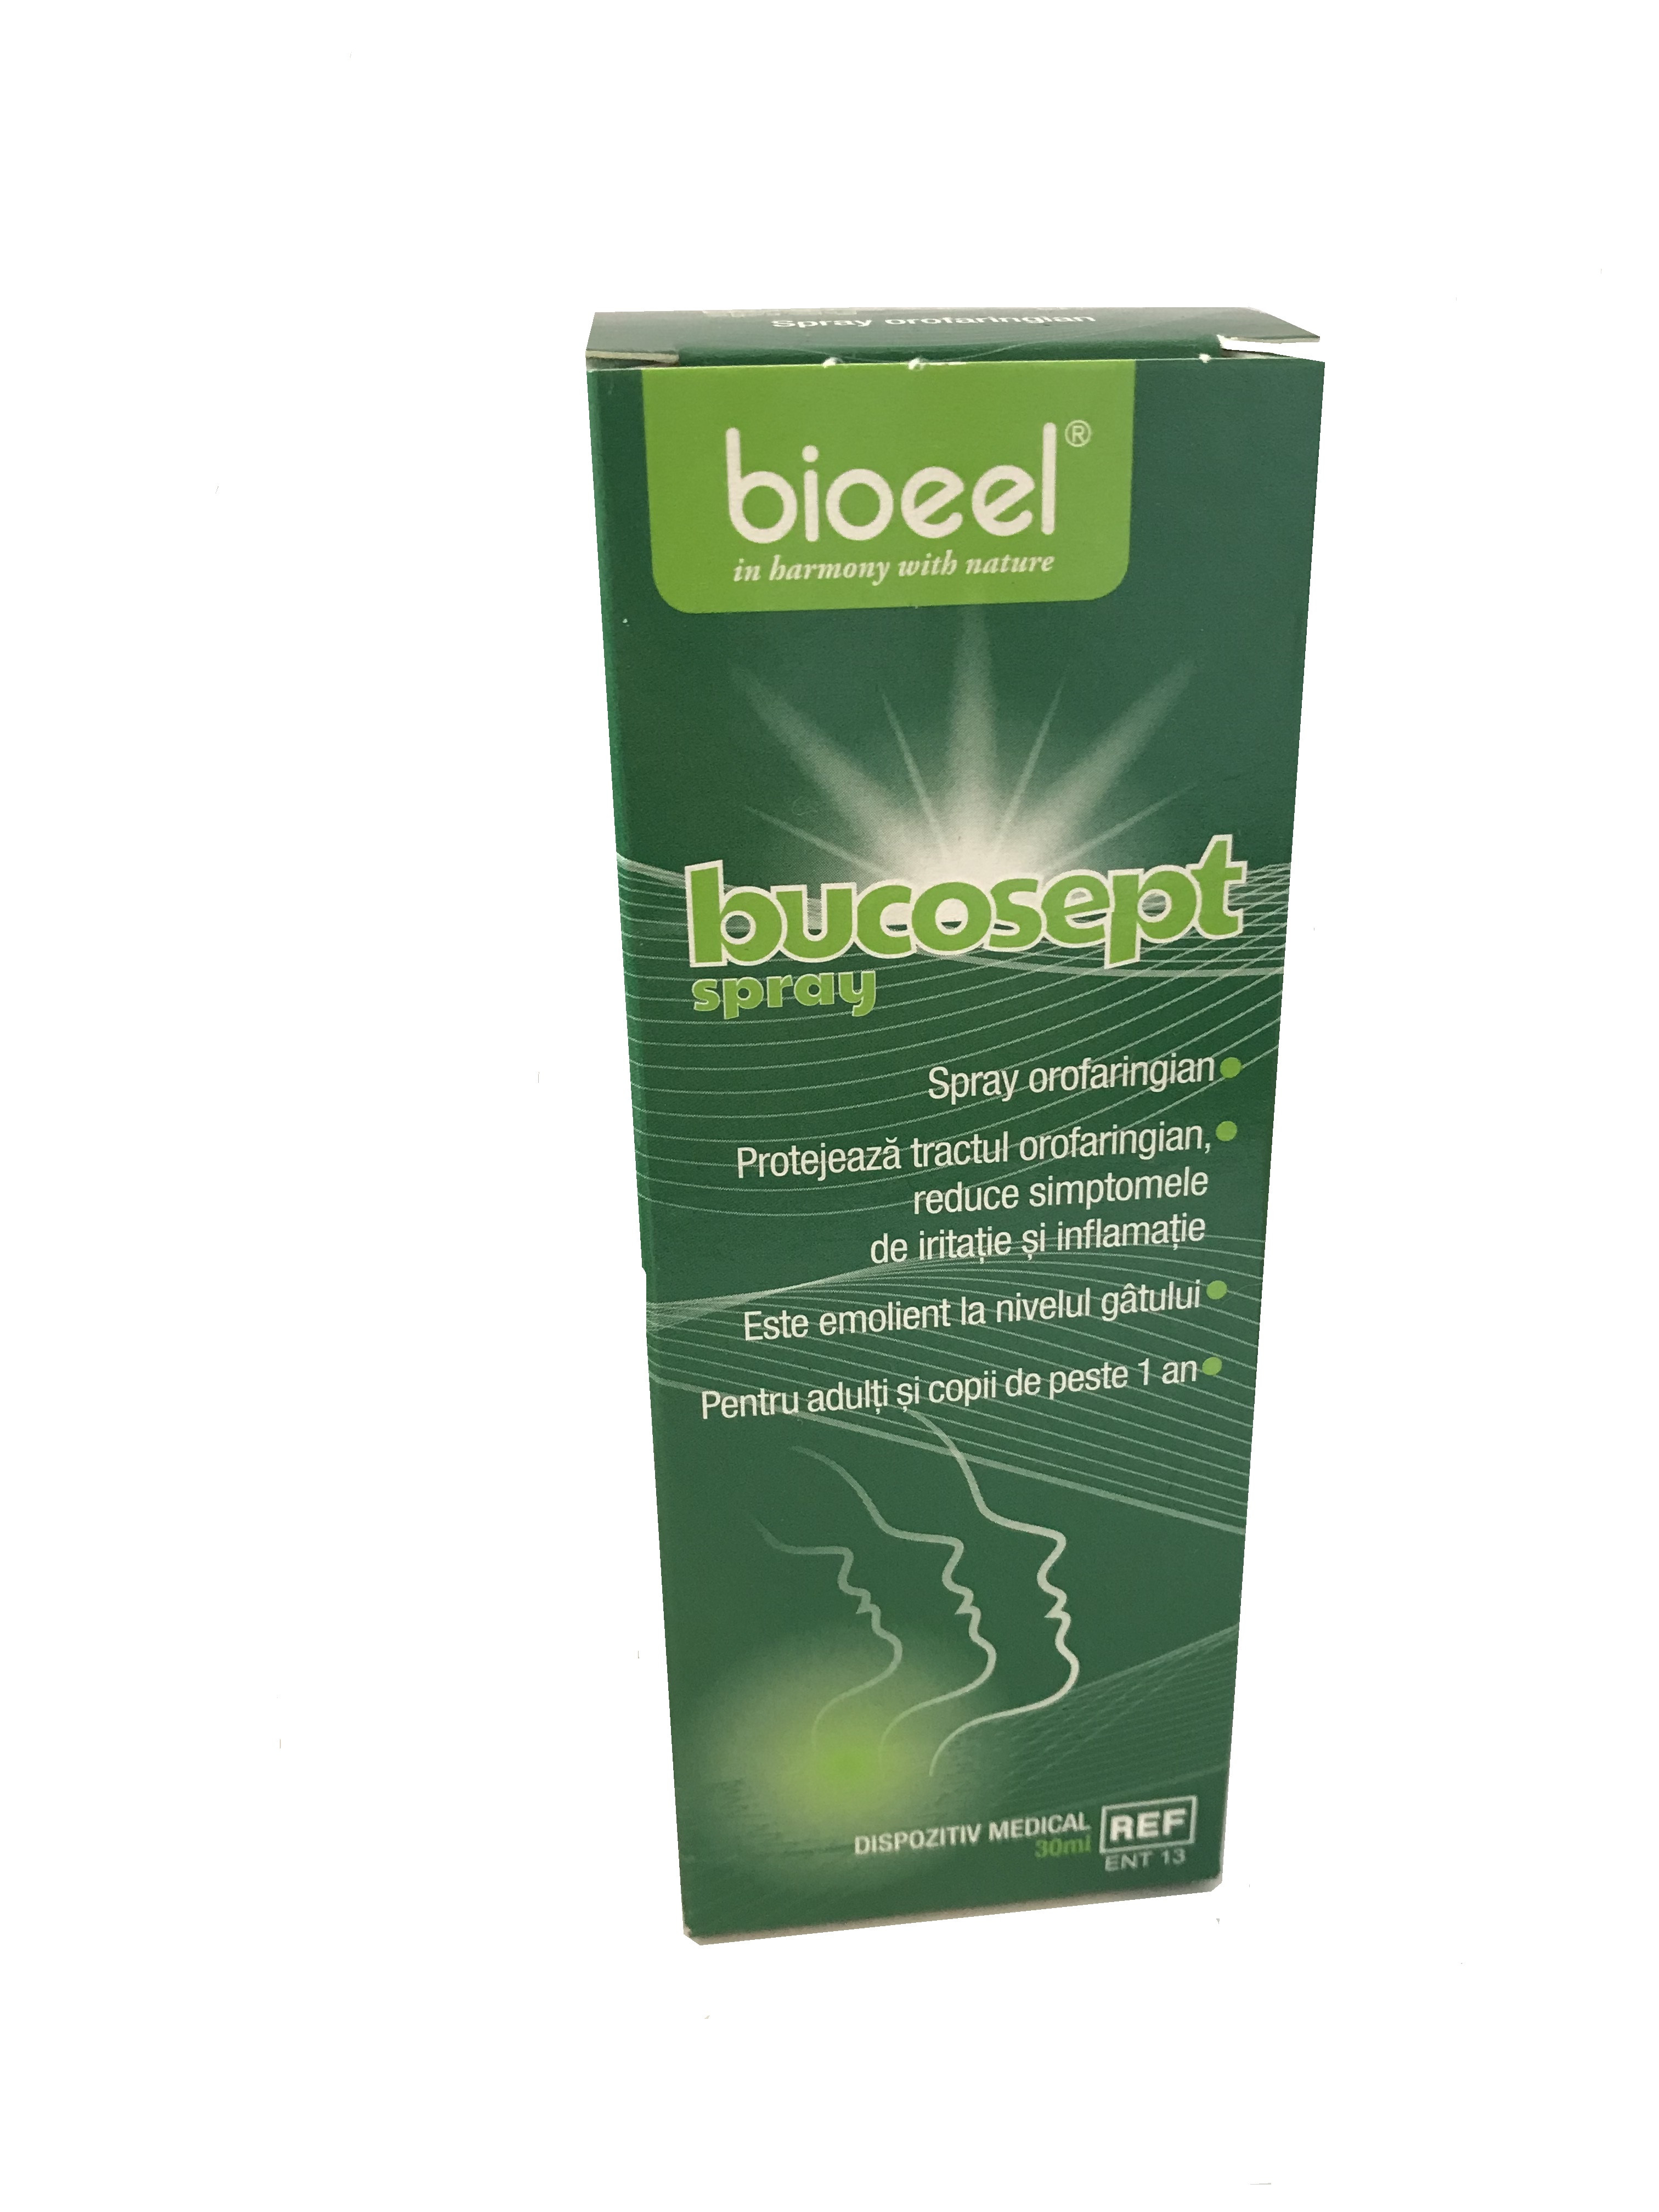 Bucosept spray 30 ml bioeel